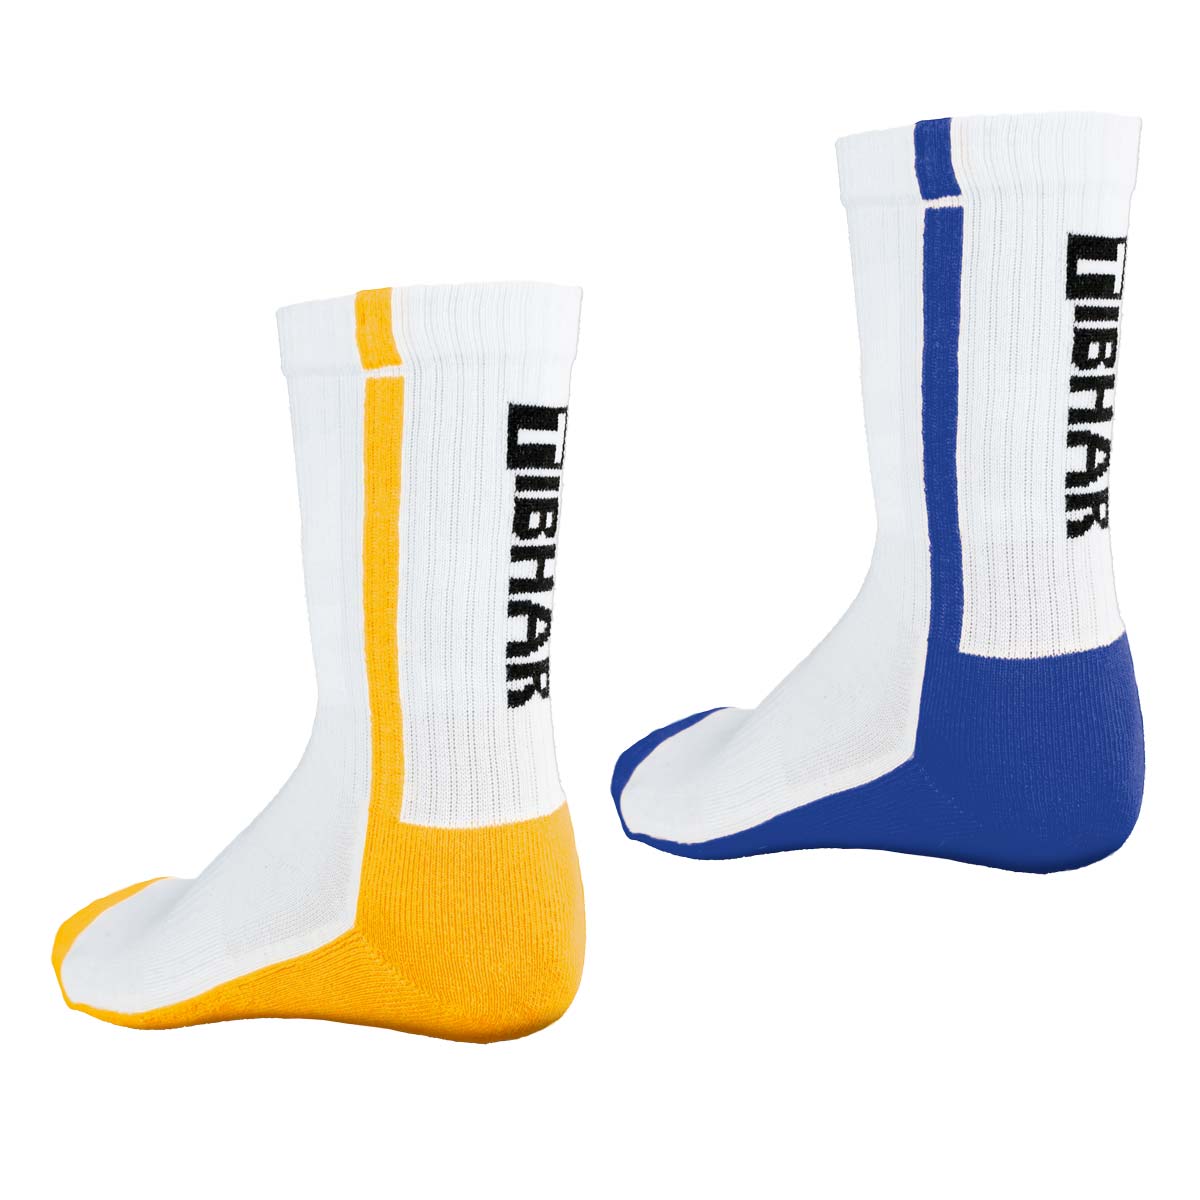 TIBHAR Socks Pro